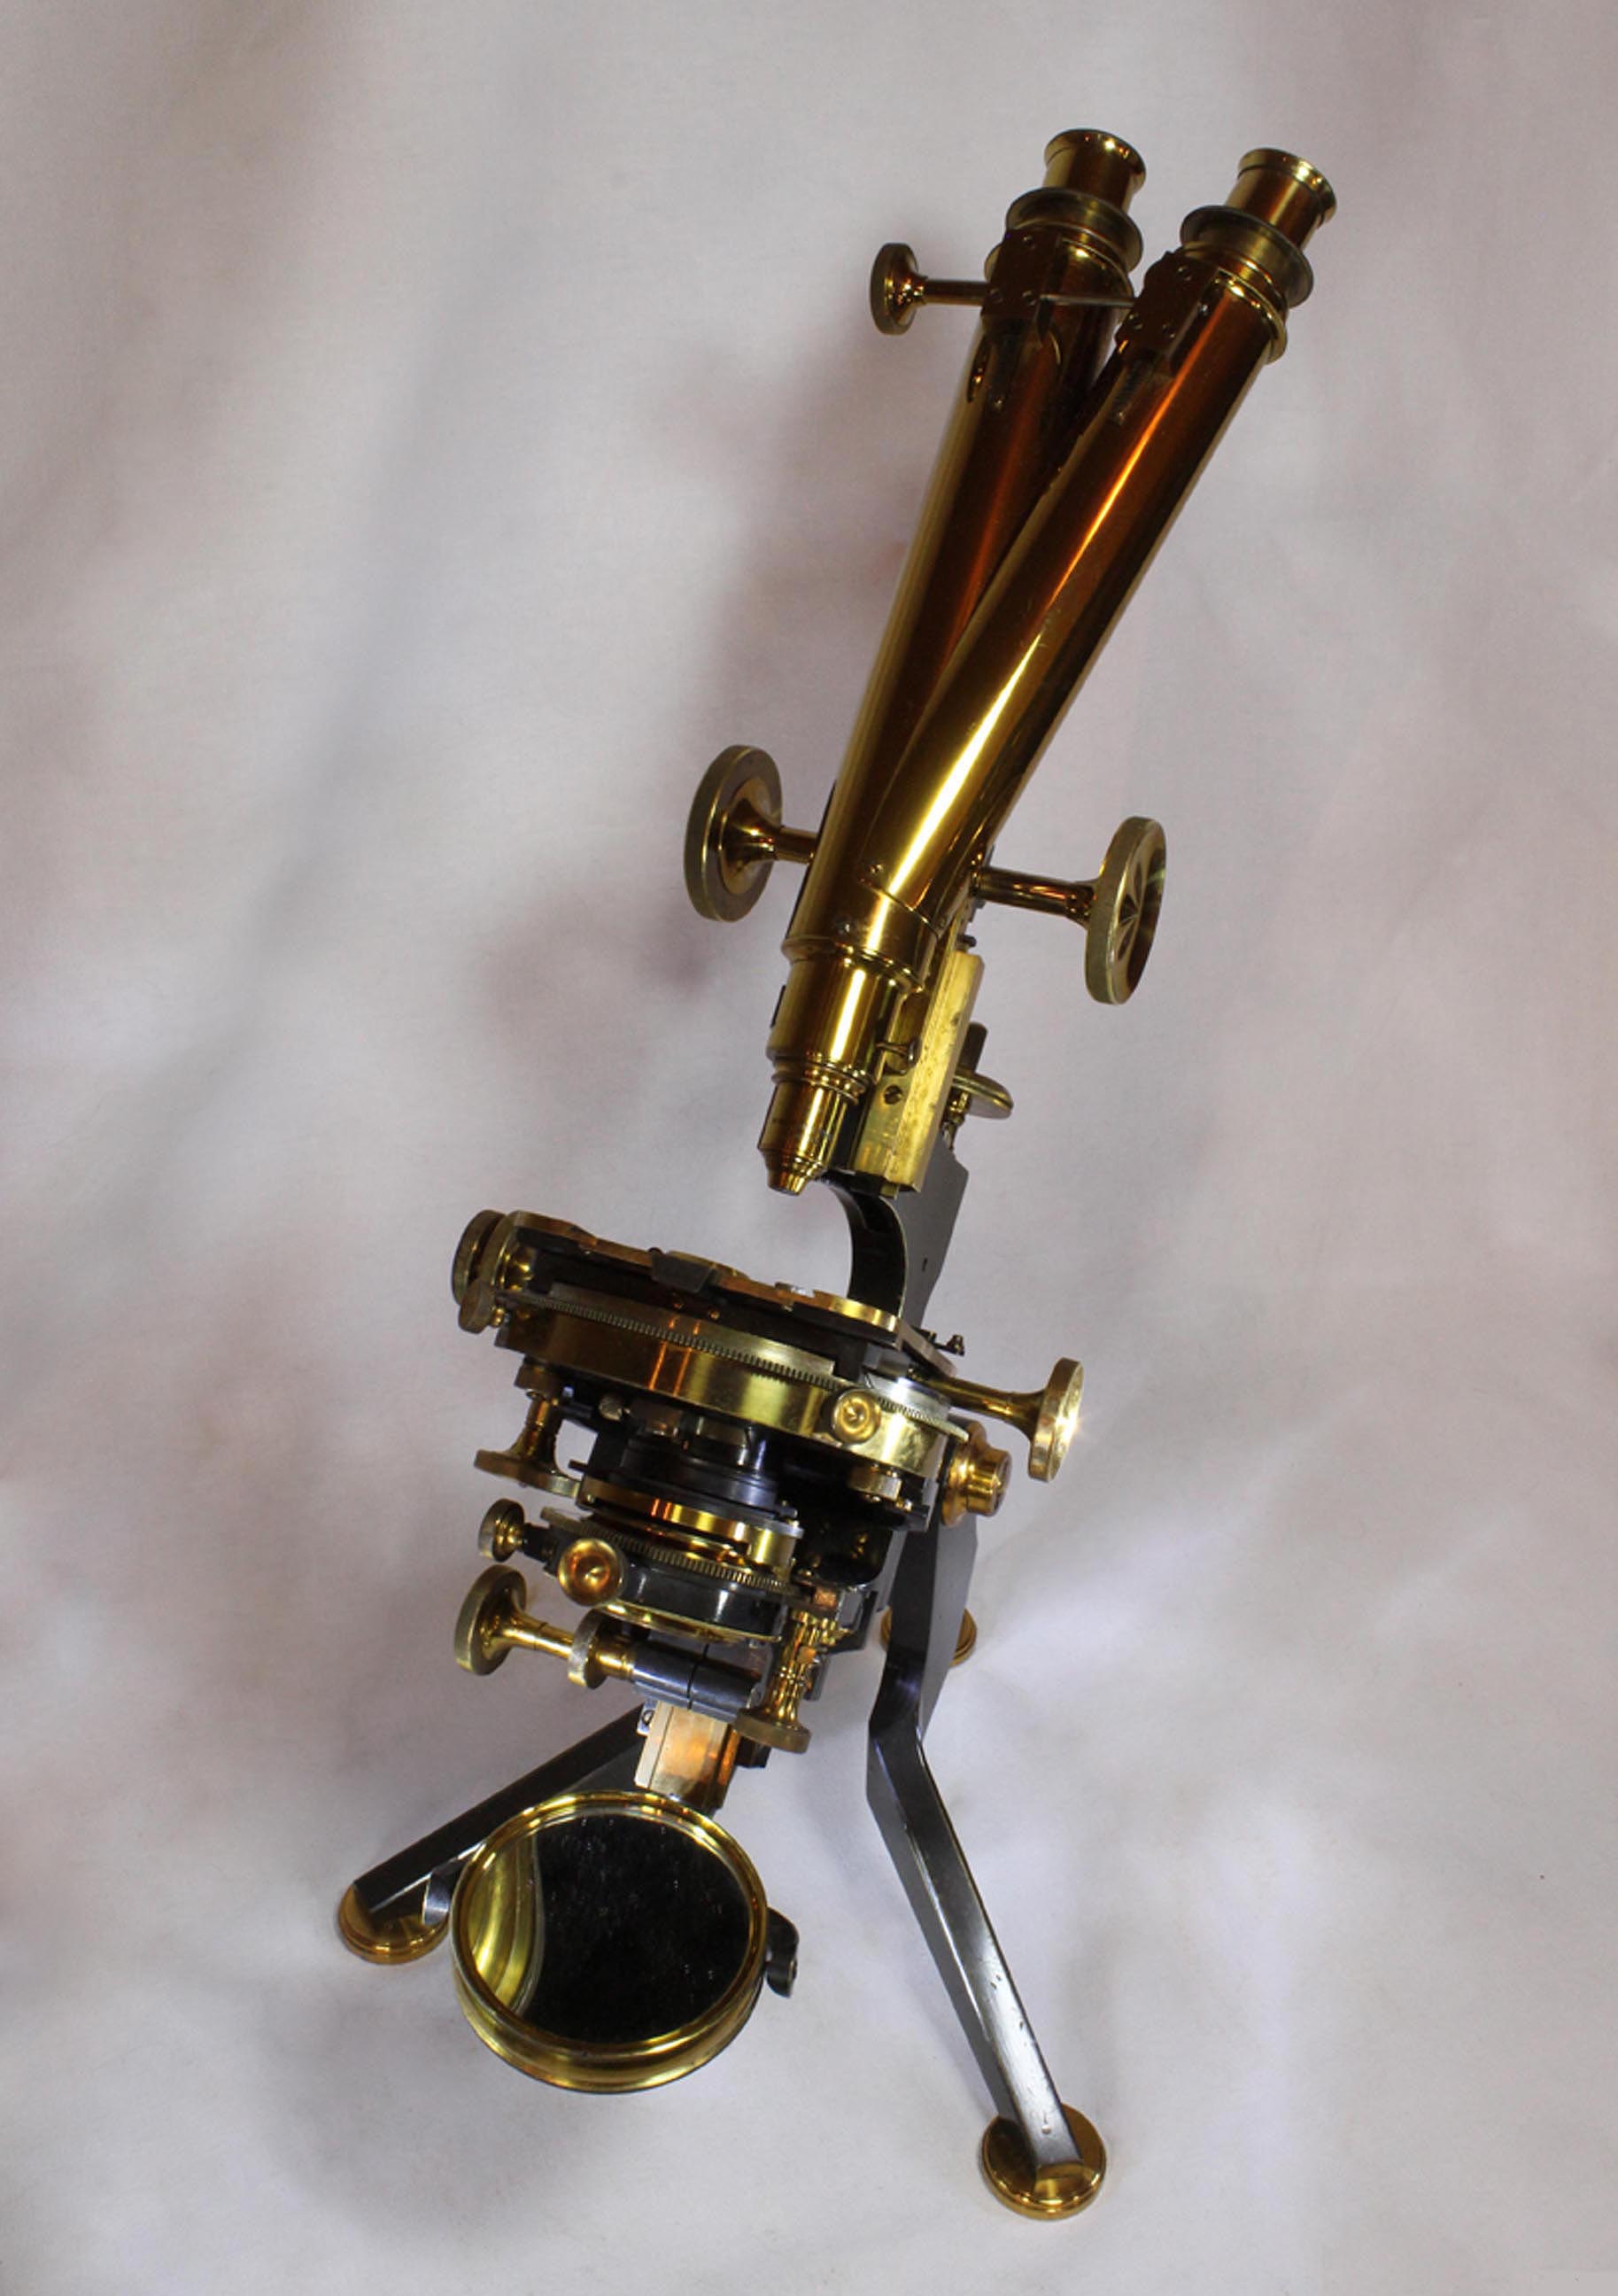 
Grand Van Heurck Microscope